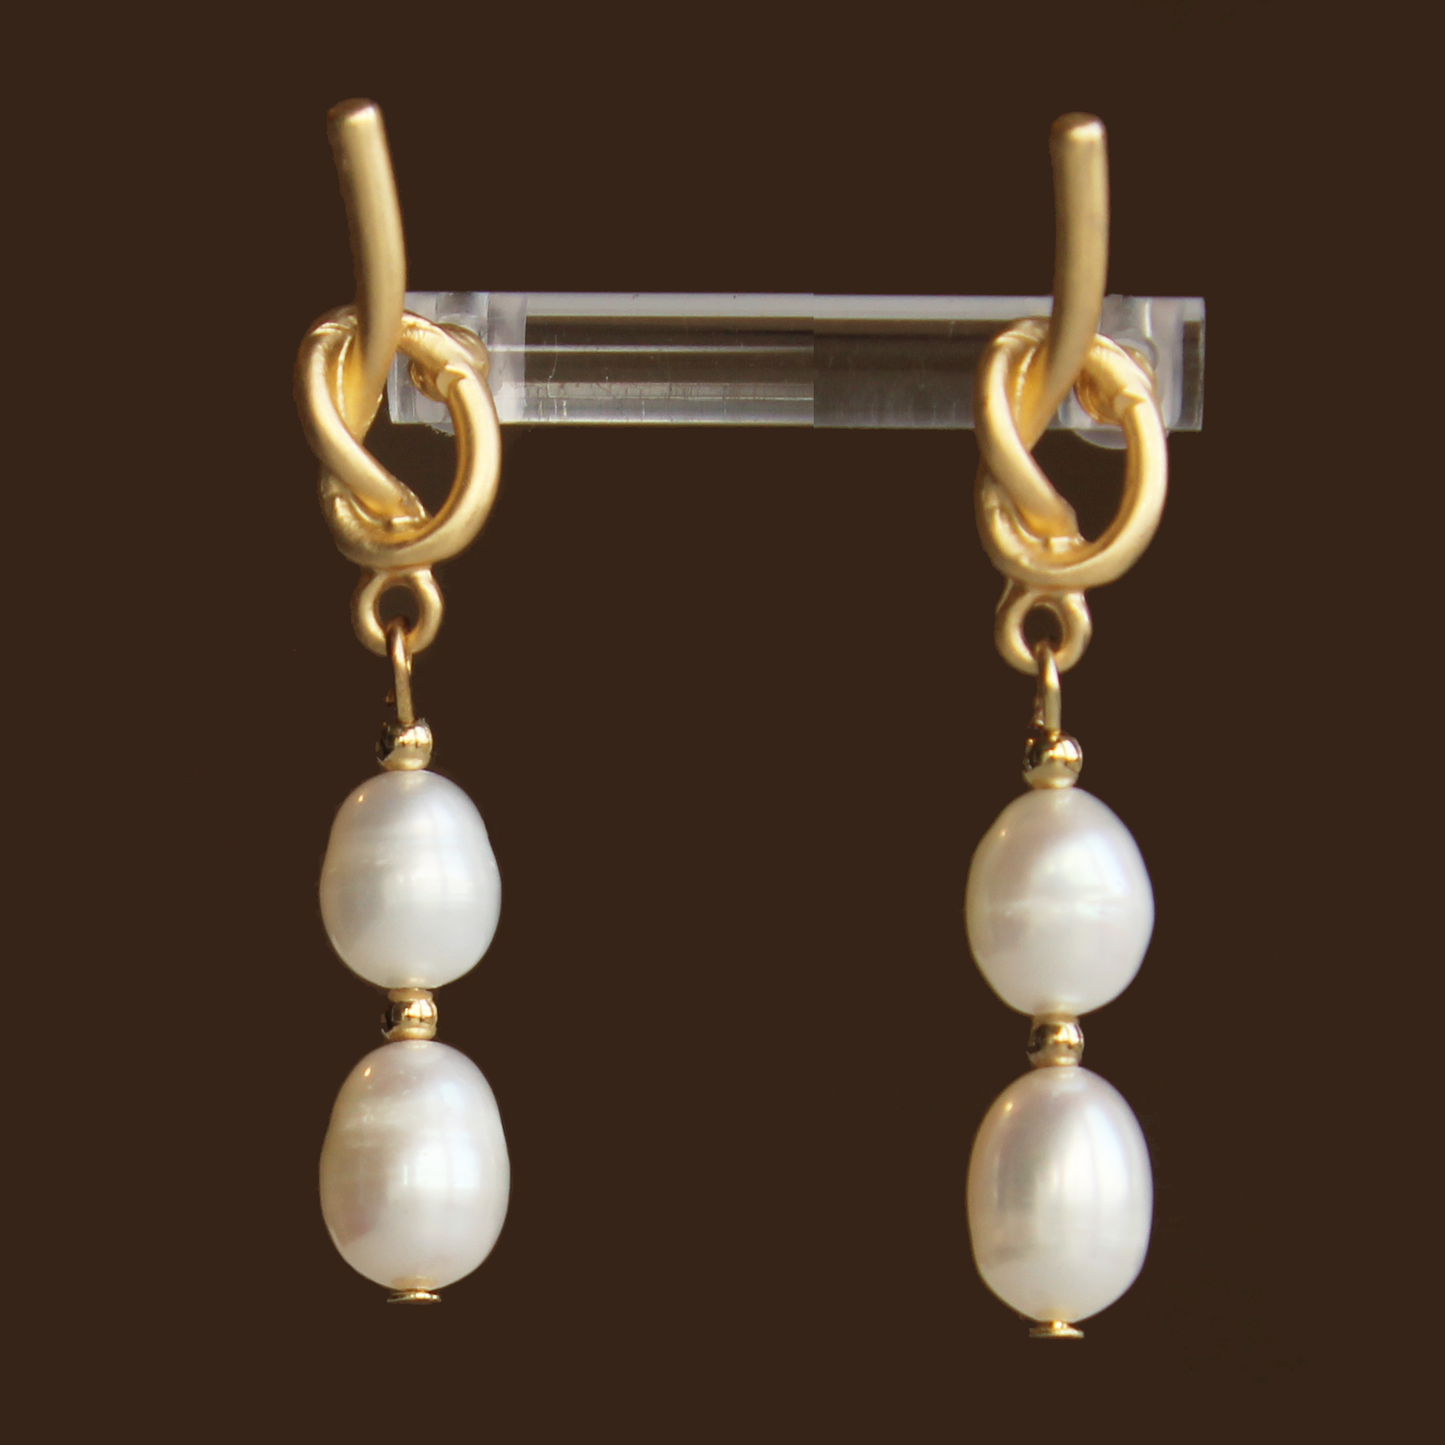 Two natural freshwater pearl earrings